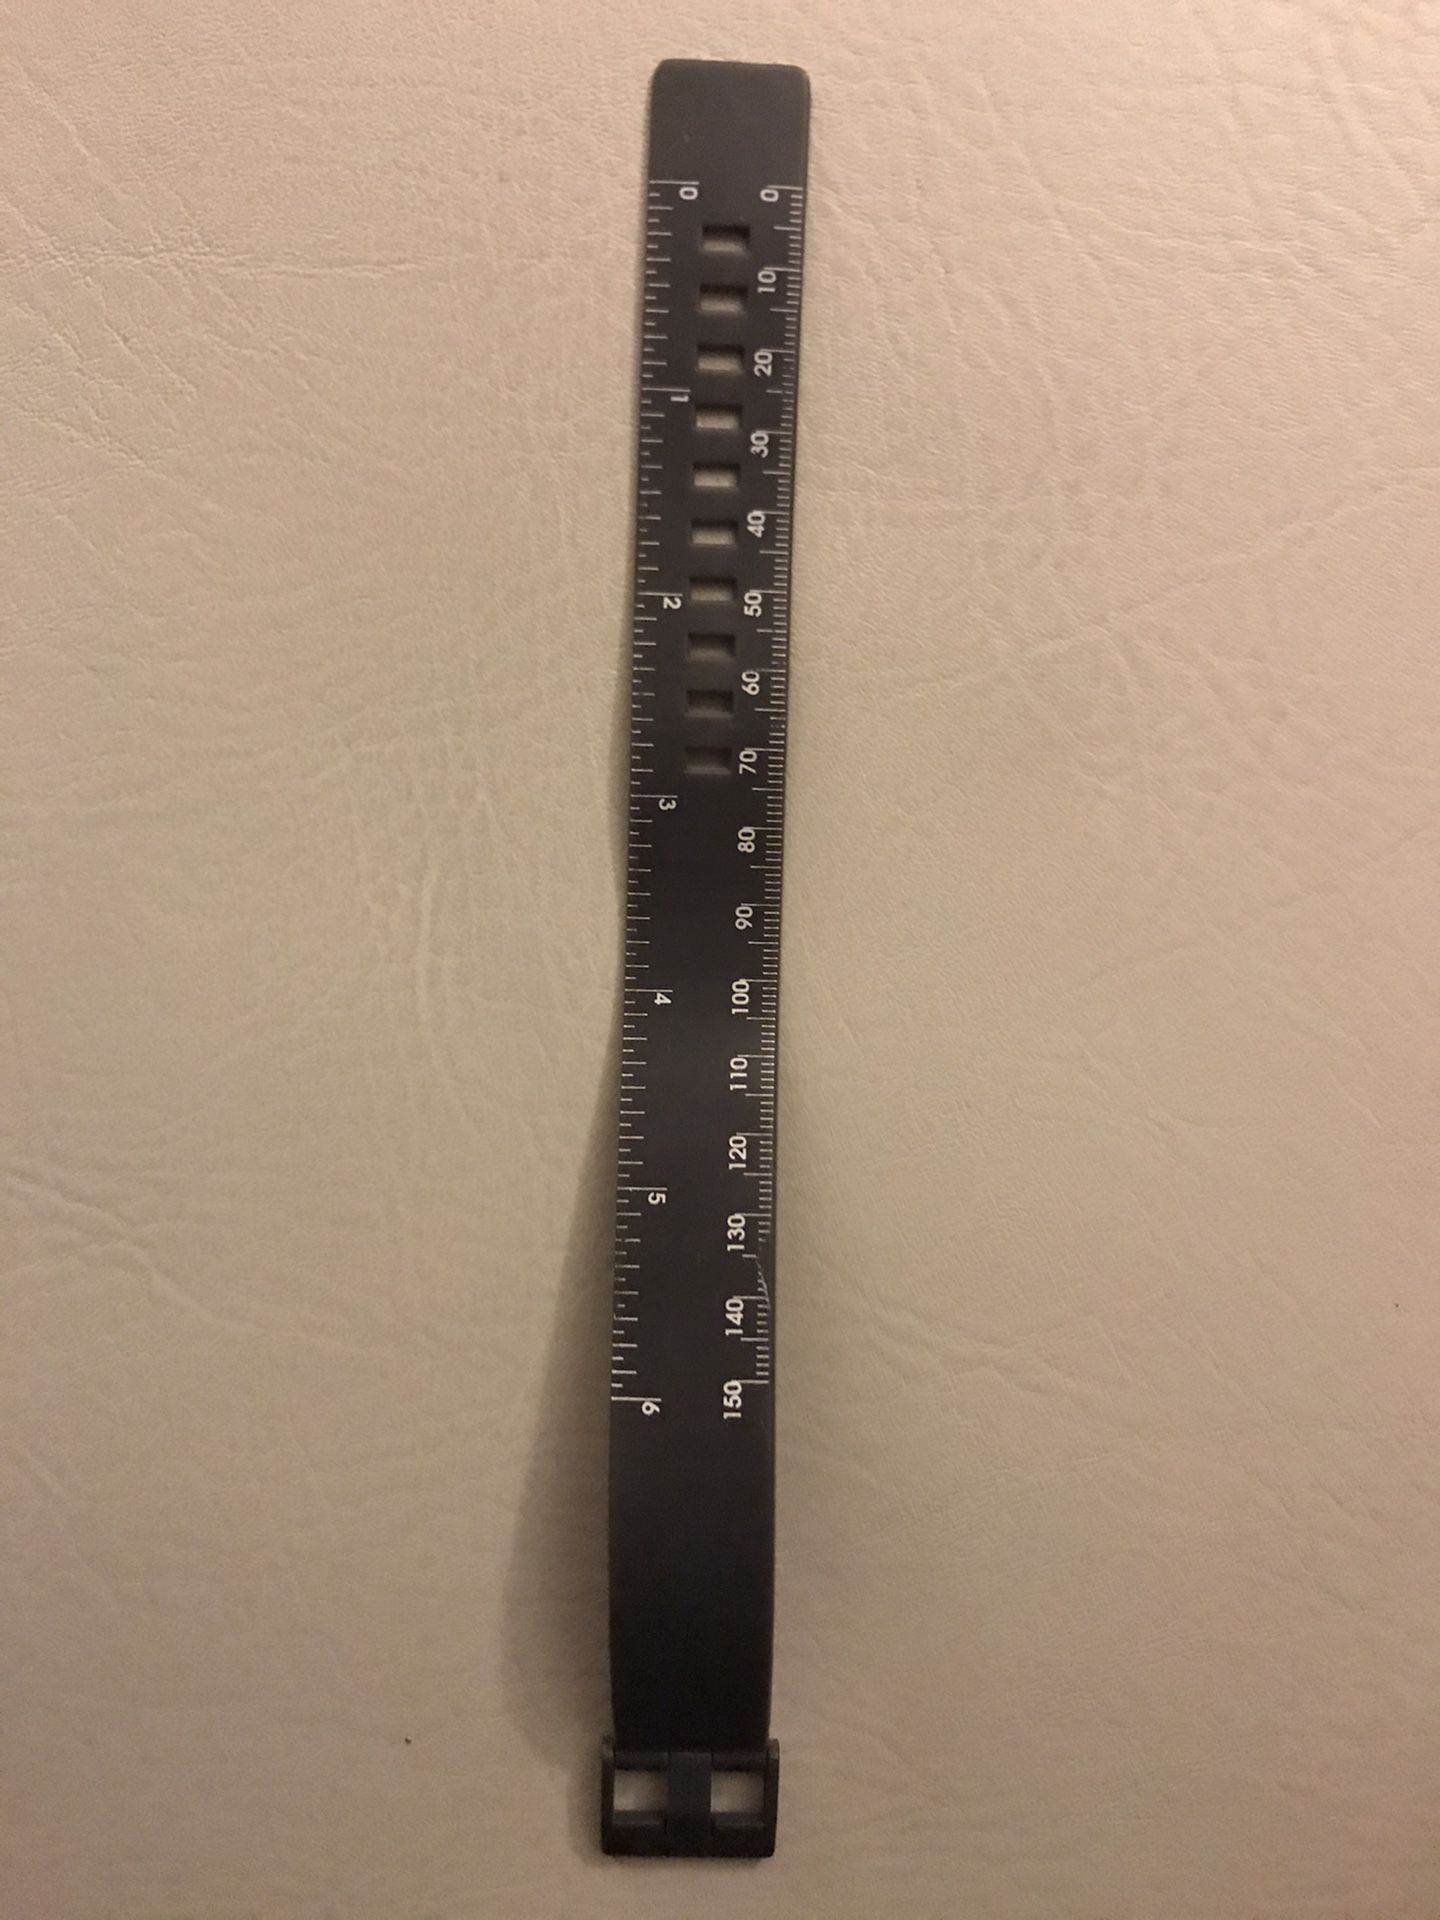 Wristband ruler